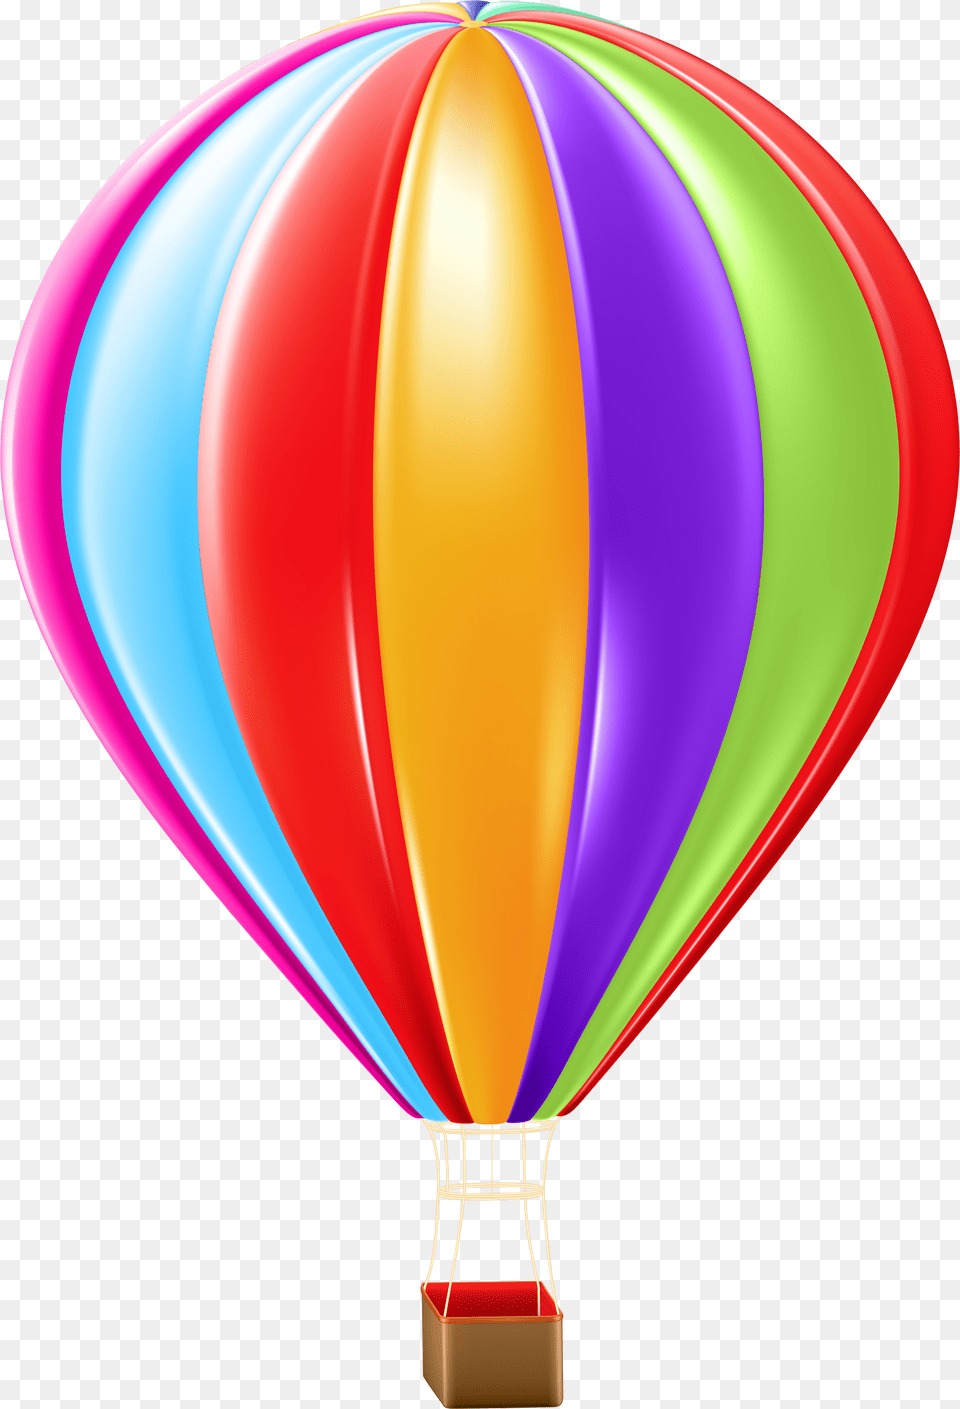 Hot Air Balloon Clip Art Balloons In Air Clipart Png Image